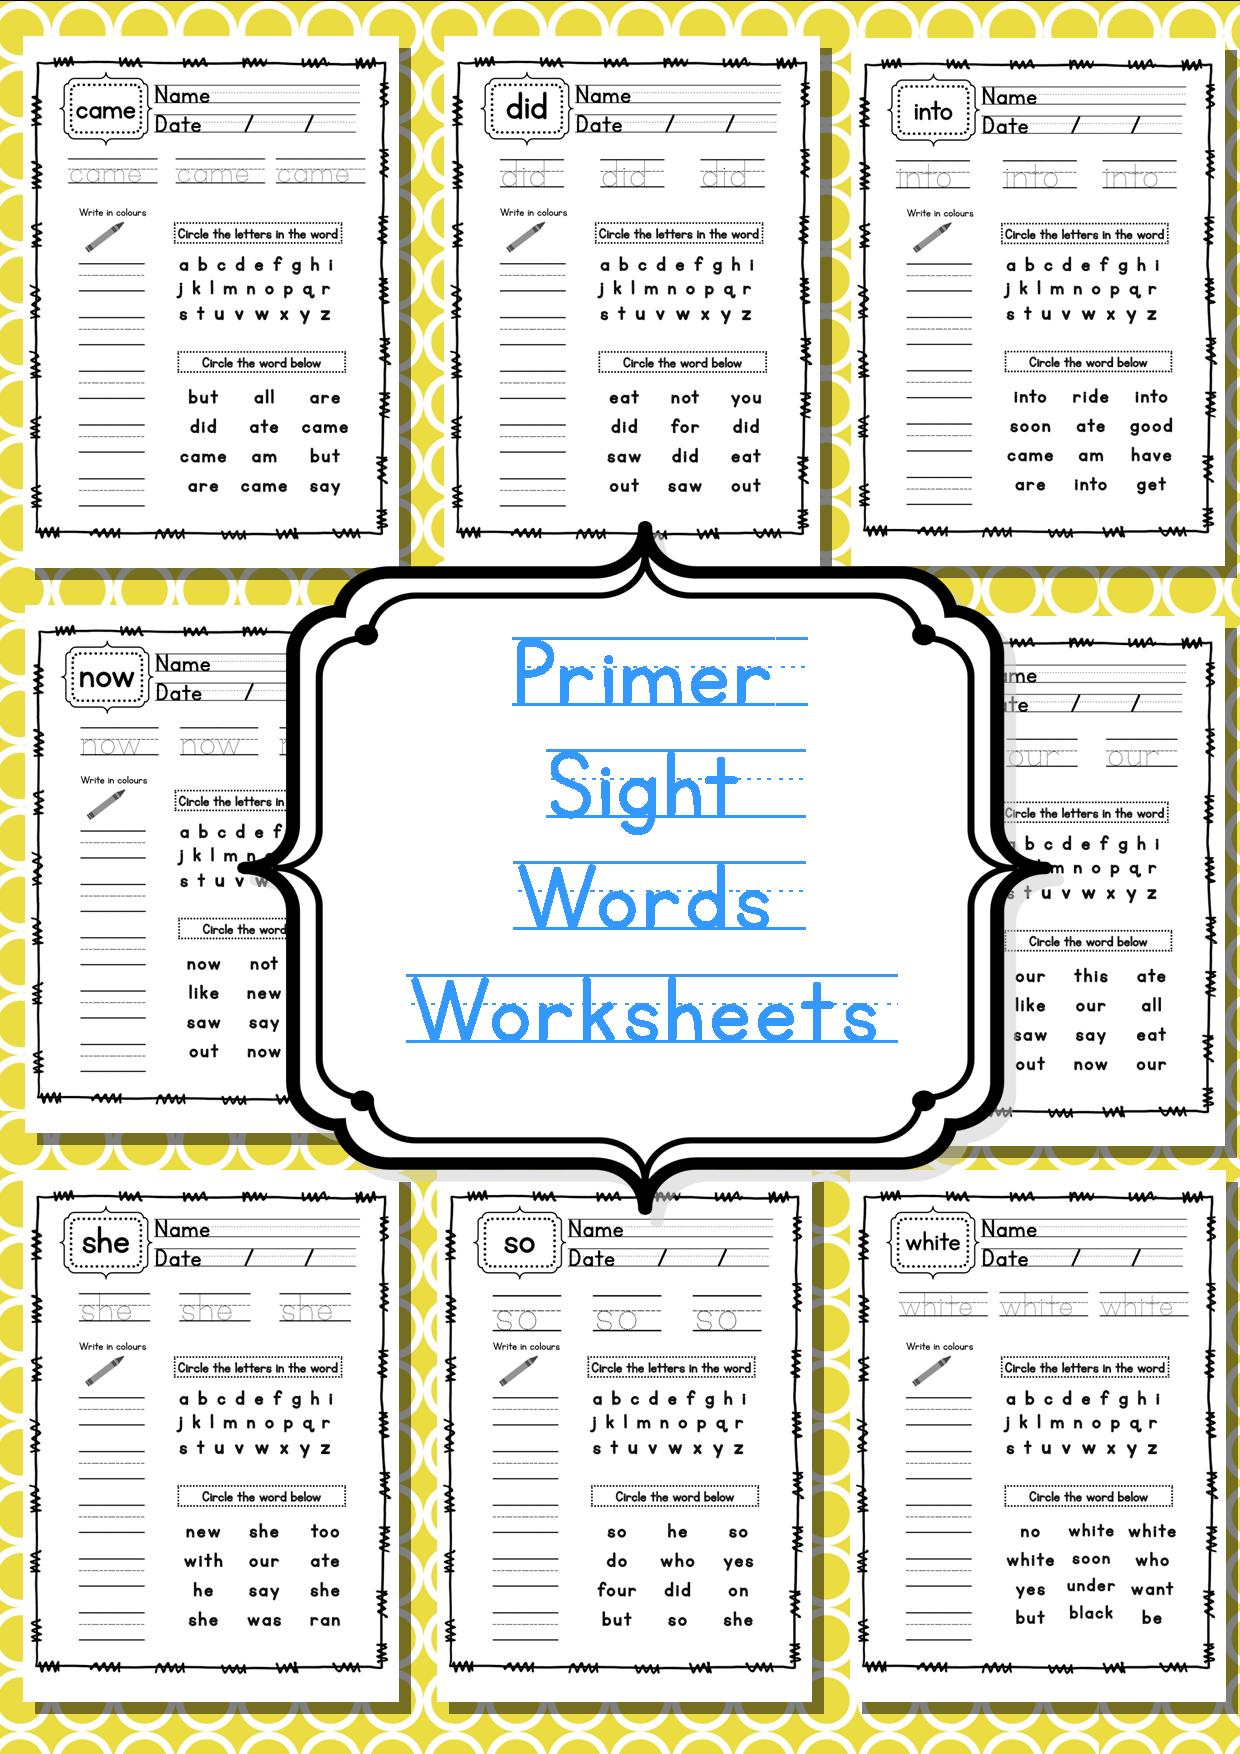 primer sight word worksheets teaching resources blog